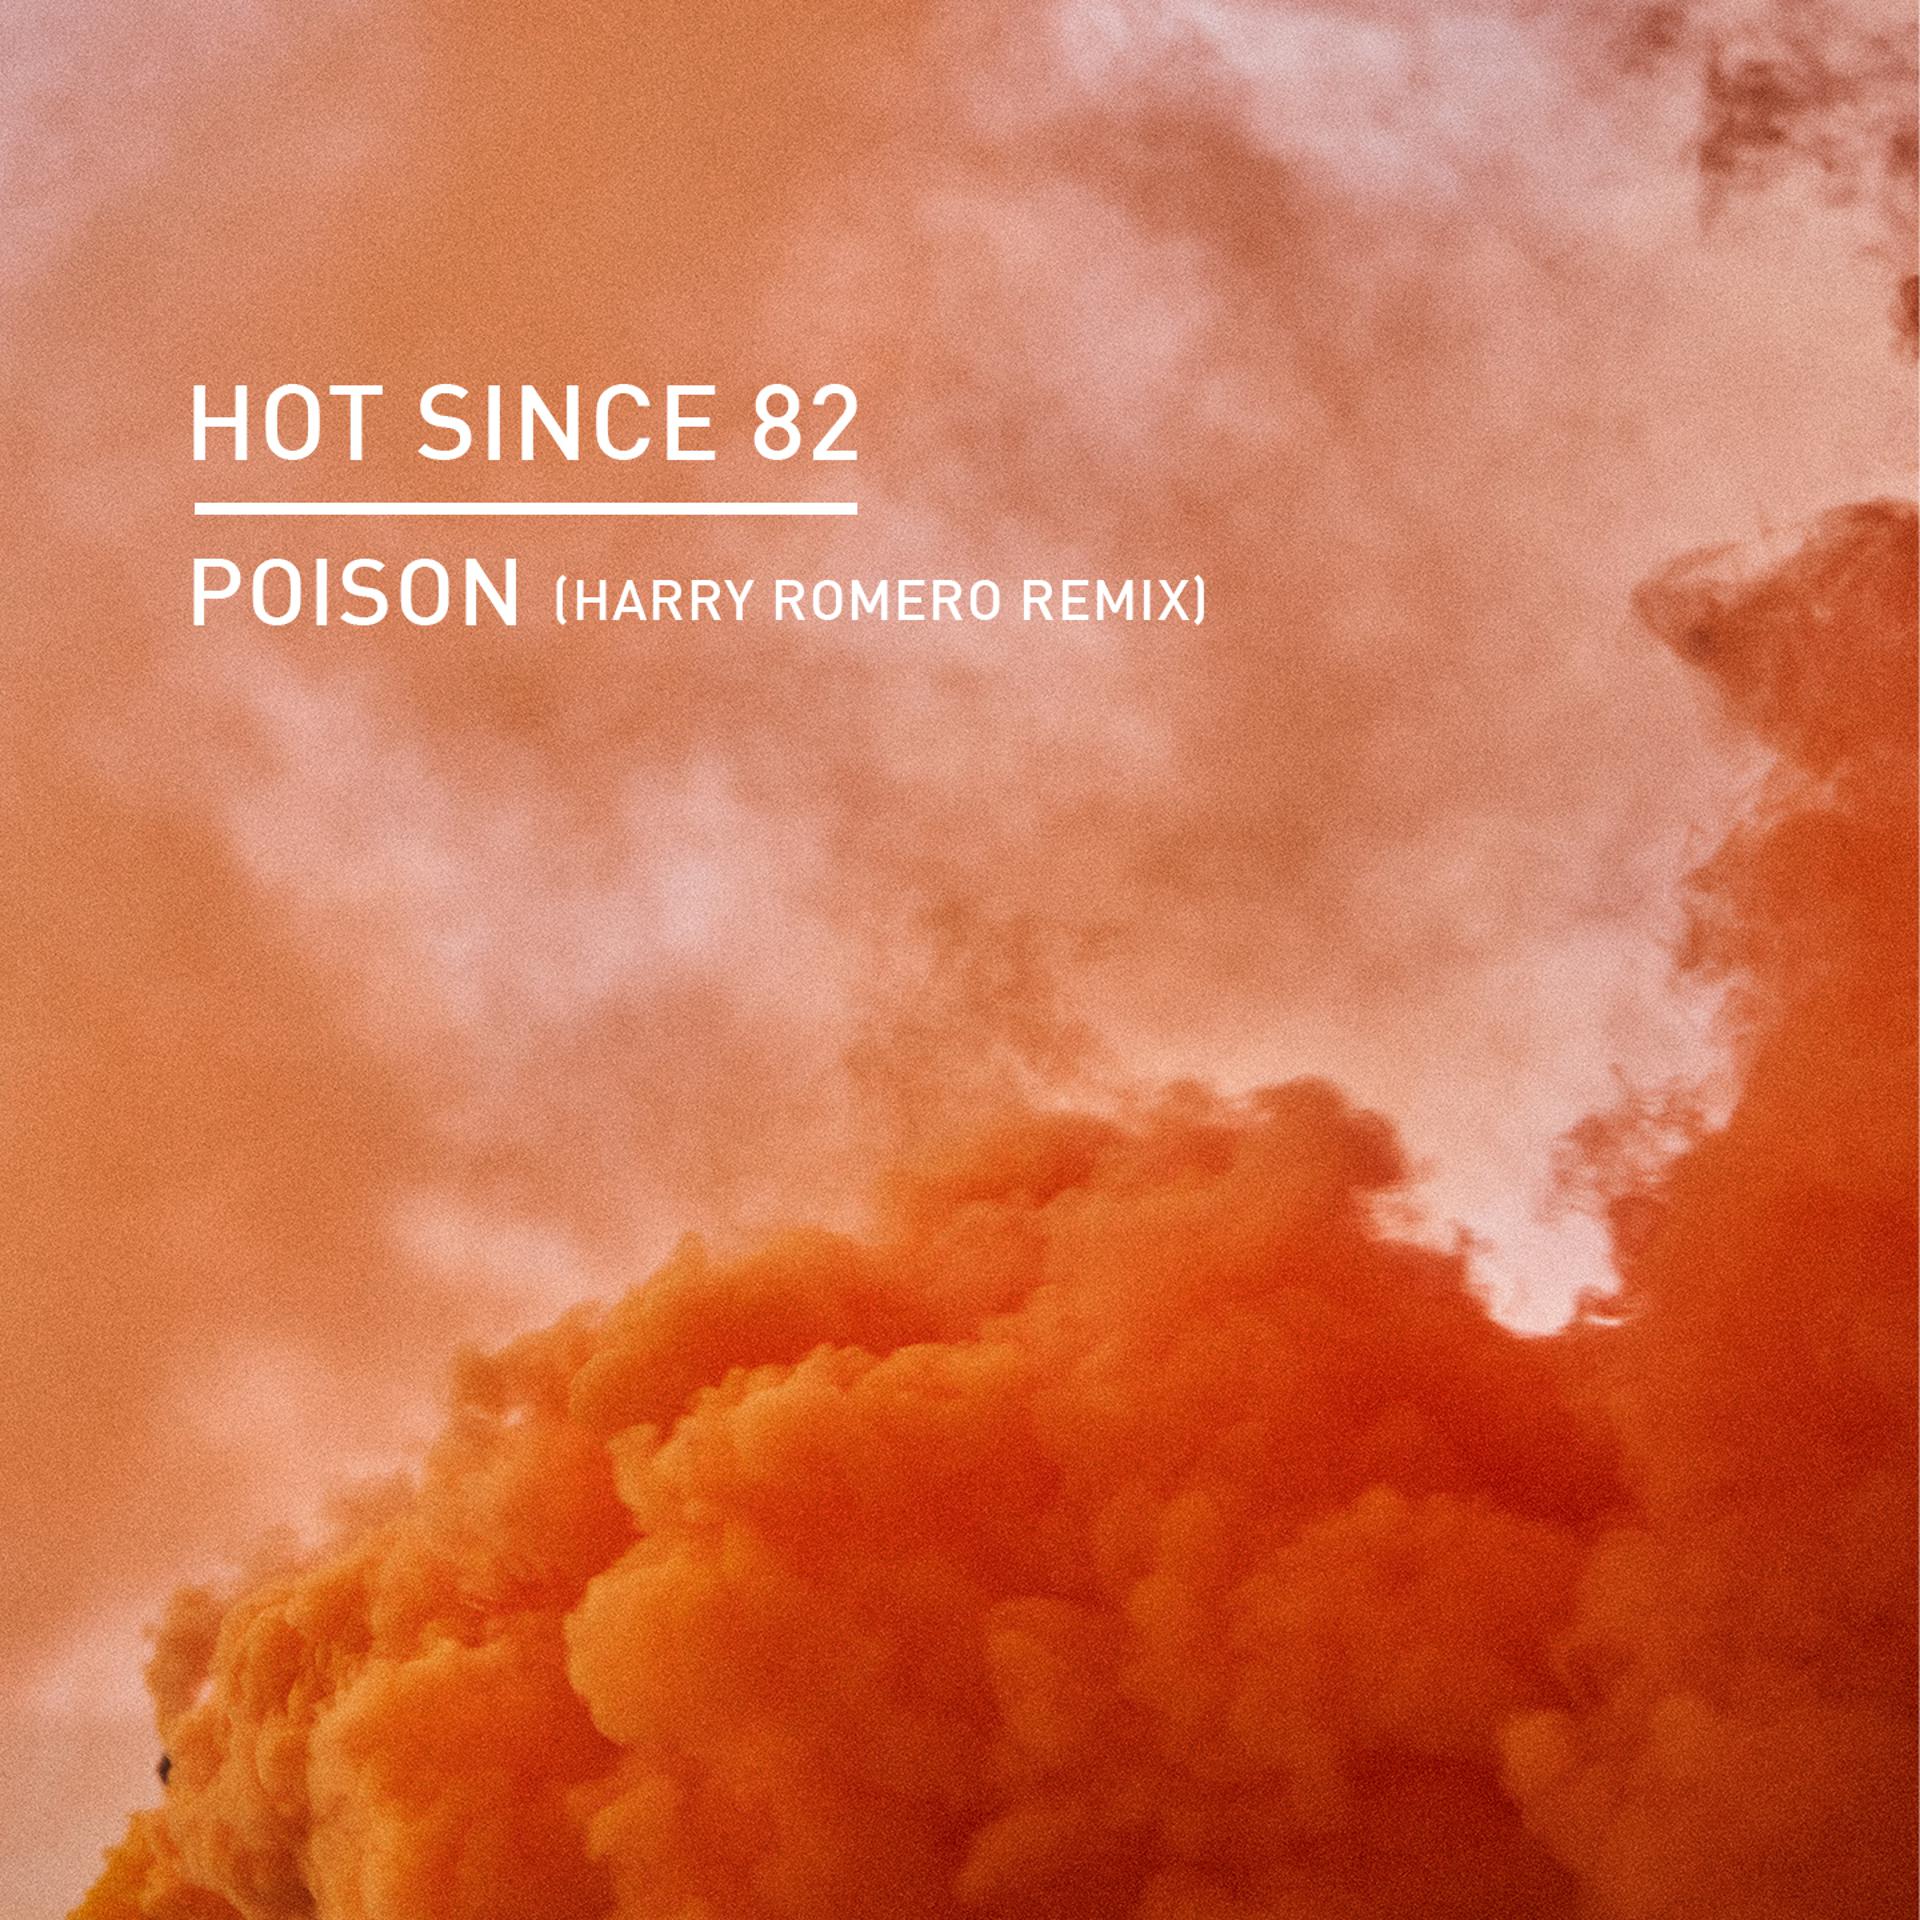 Hot since. Hot since 82 - Poison. Hot since 82. Hot since 82 Shadows. Hot since 82 Cecrle.